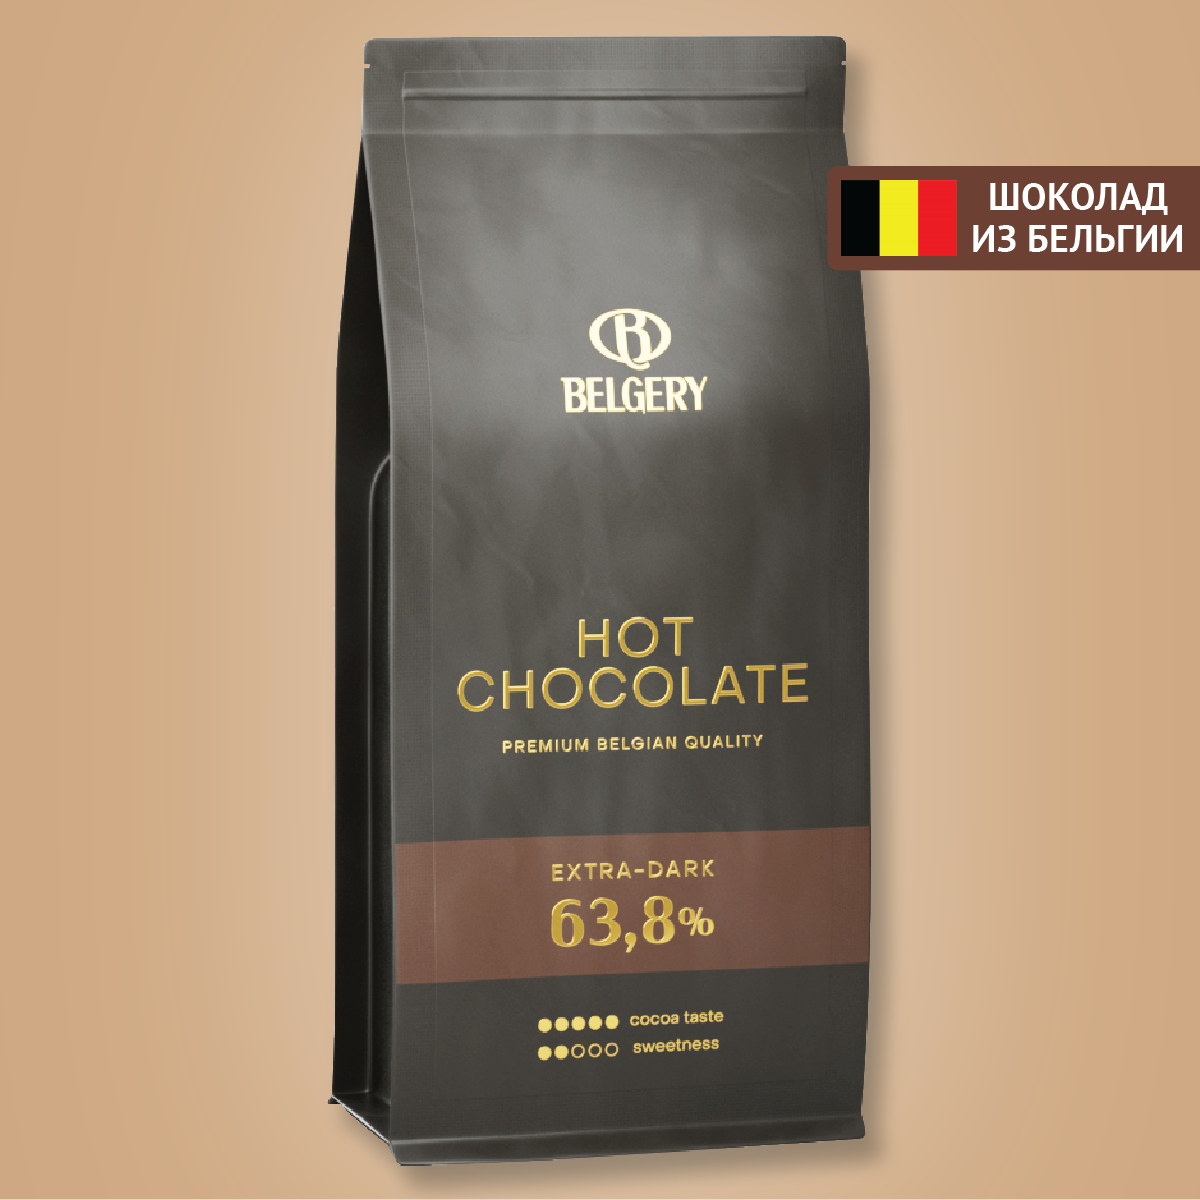 Бельгийский горячий шоколад 63,8%, Belgery, 400гр